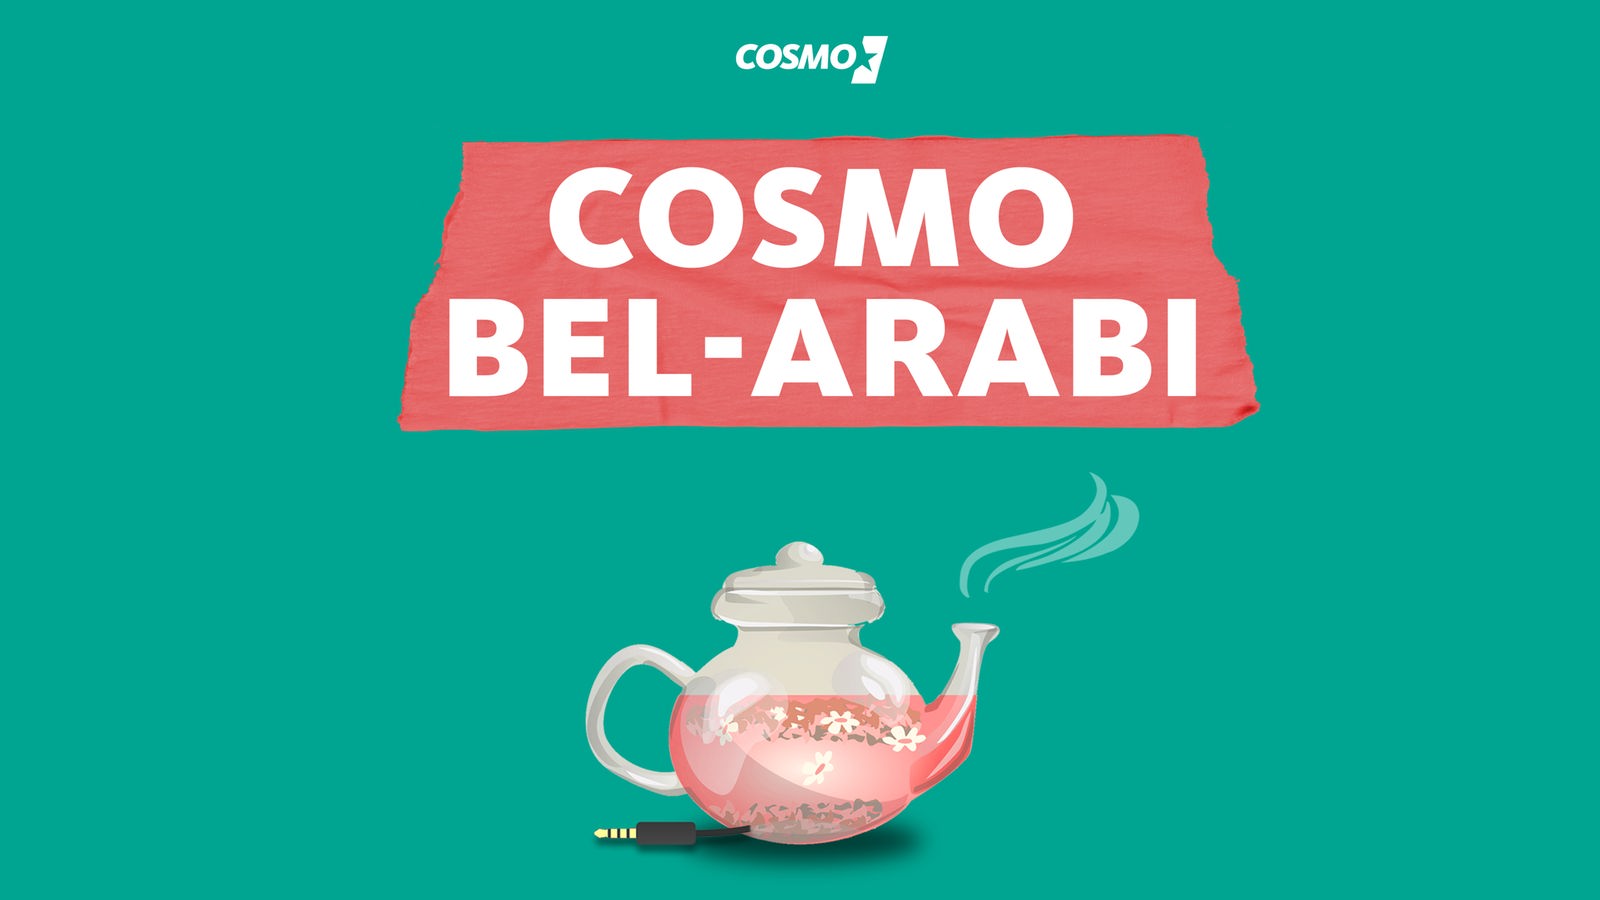 Cosmo bel-arabi كوزمو بالعربي - بودكاست من ألمانيا 